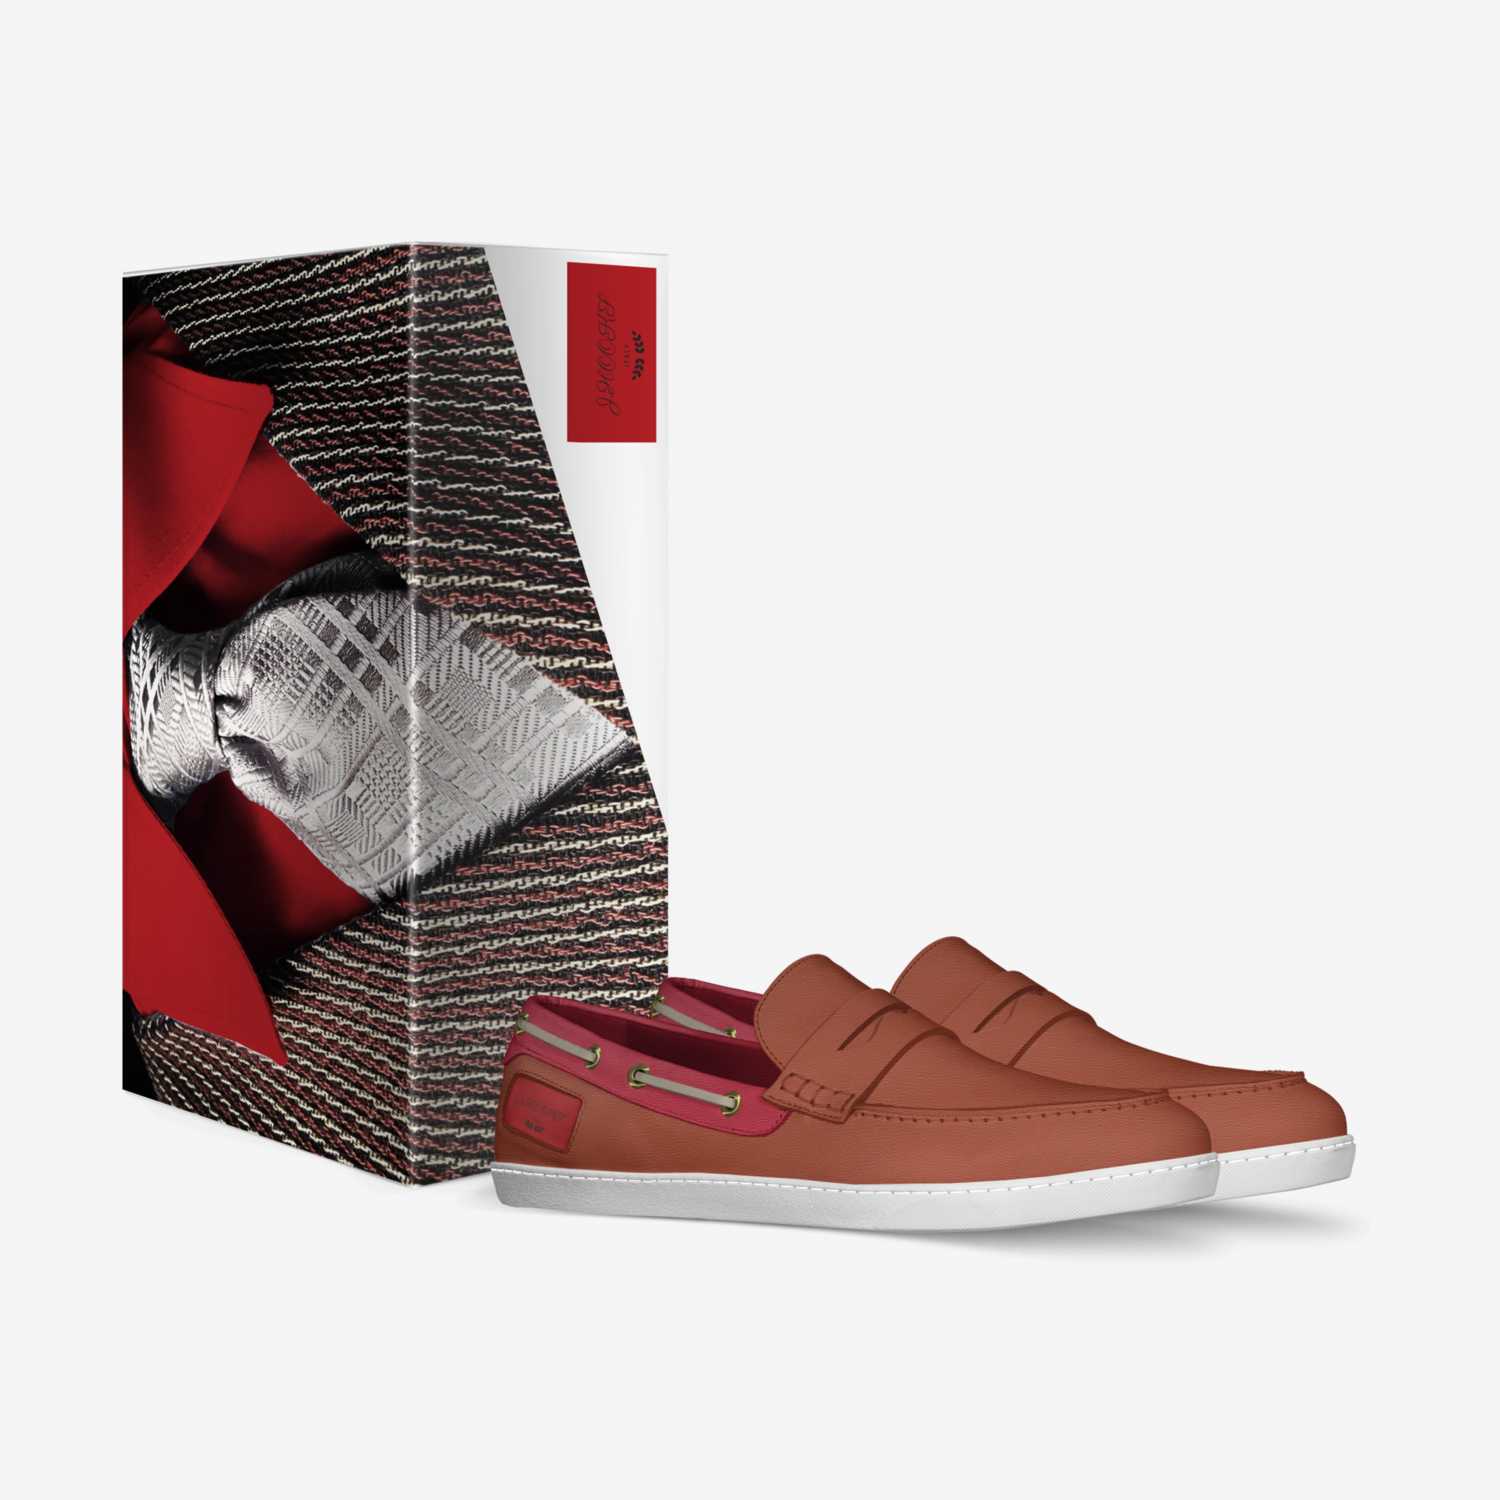 J.HOOKS custom made in Italy shoes by Leonardo Hill | Box view